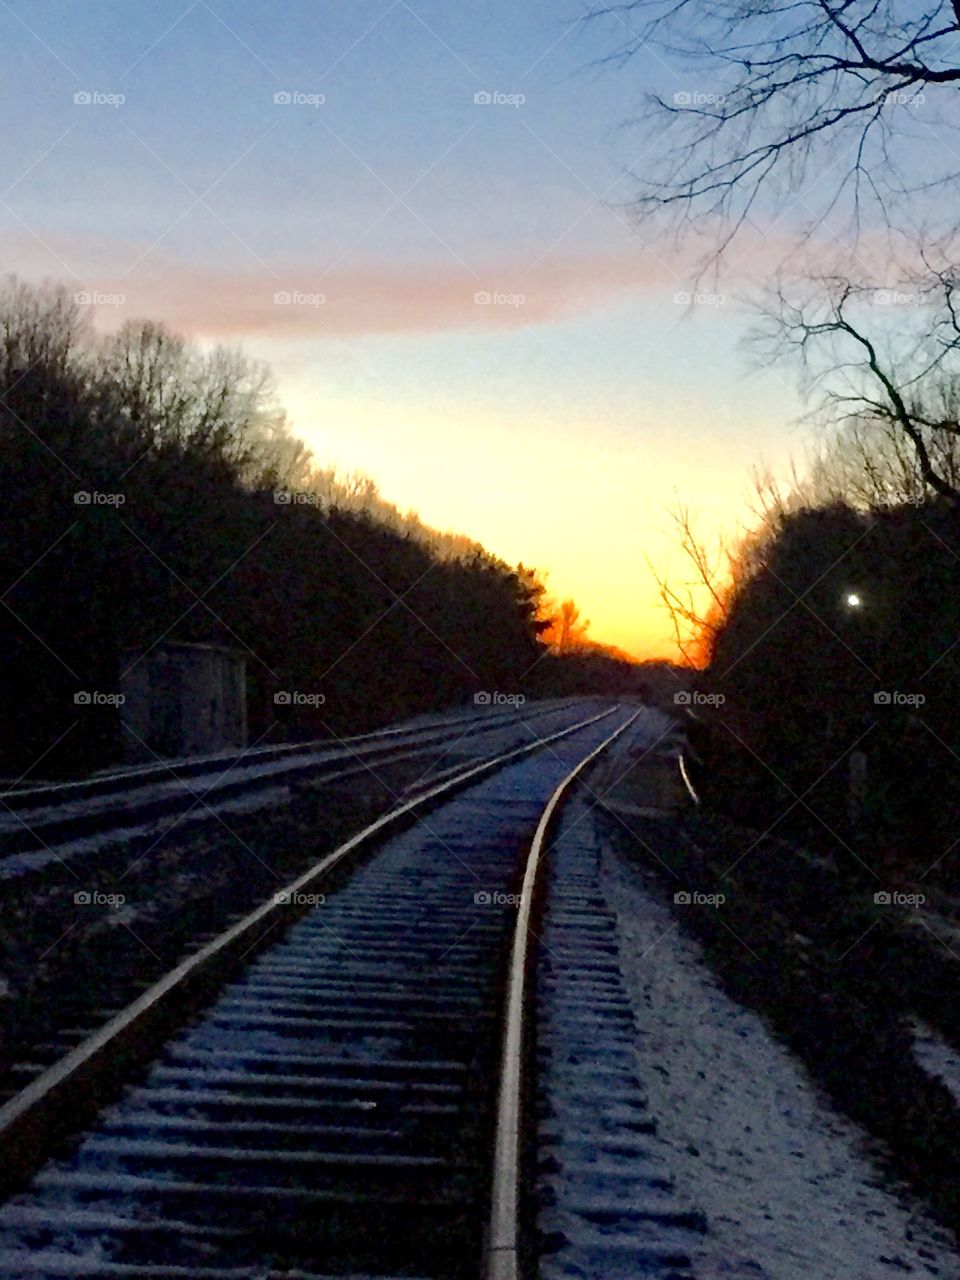 The tracks at dusk 